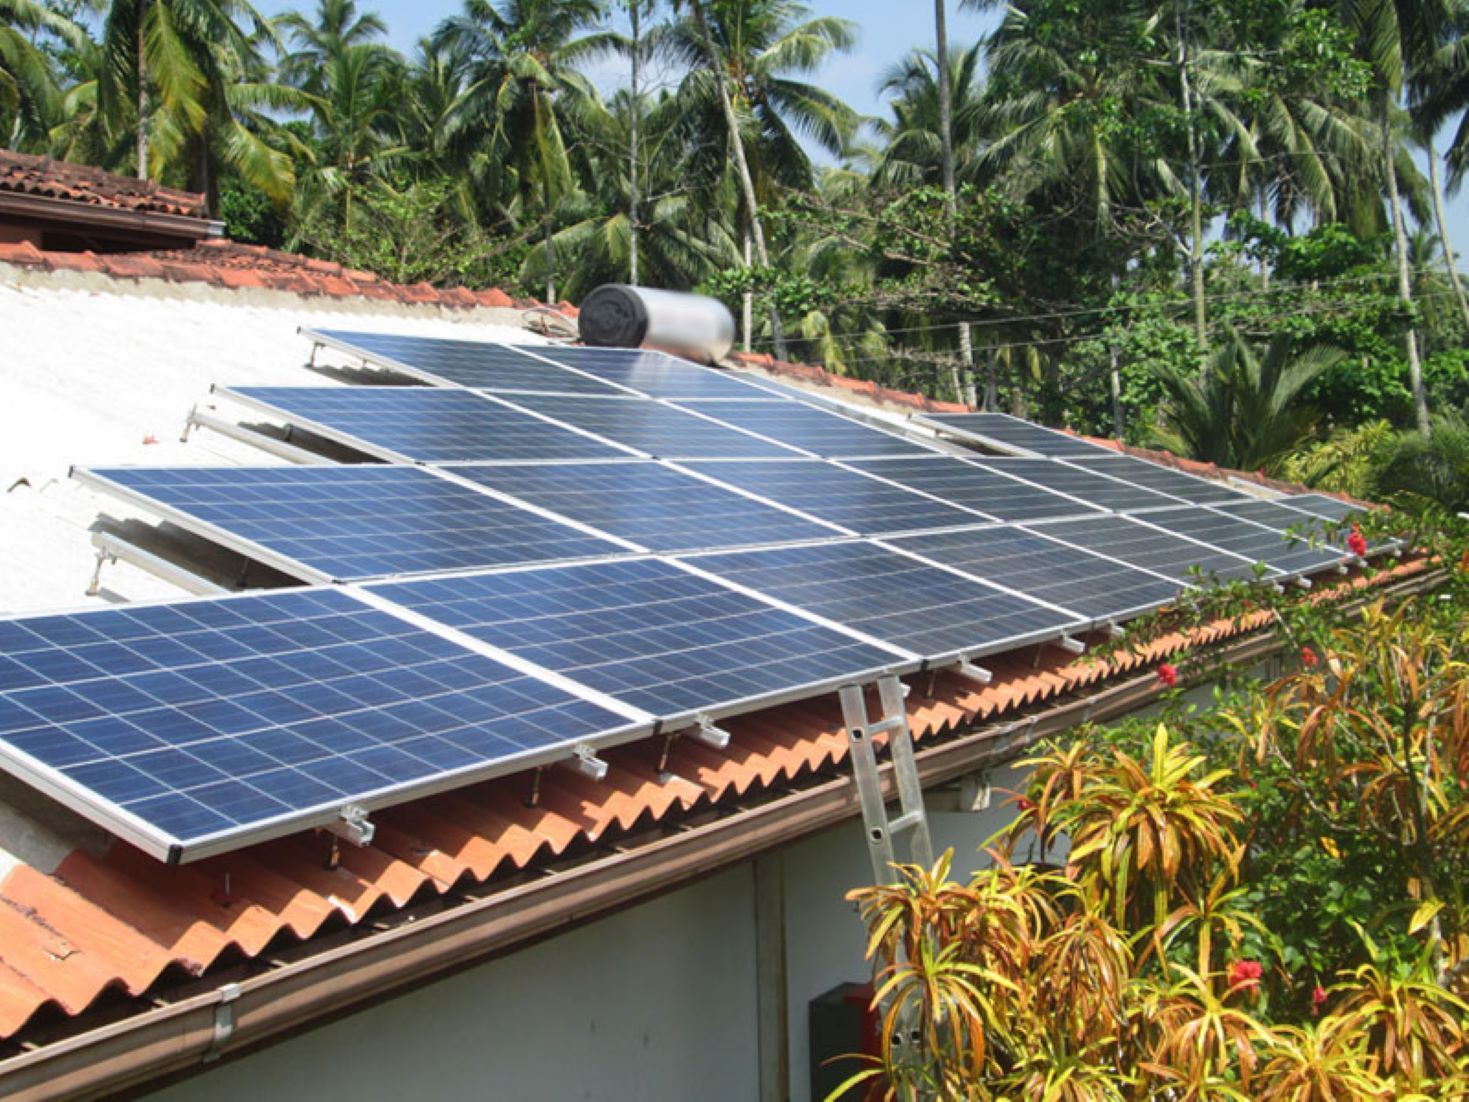 Rooftop Solar Panels Generate 483 Million Electricity Units In Sri Lanka